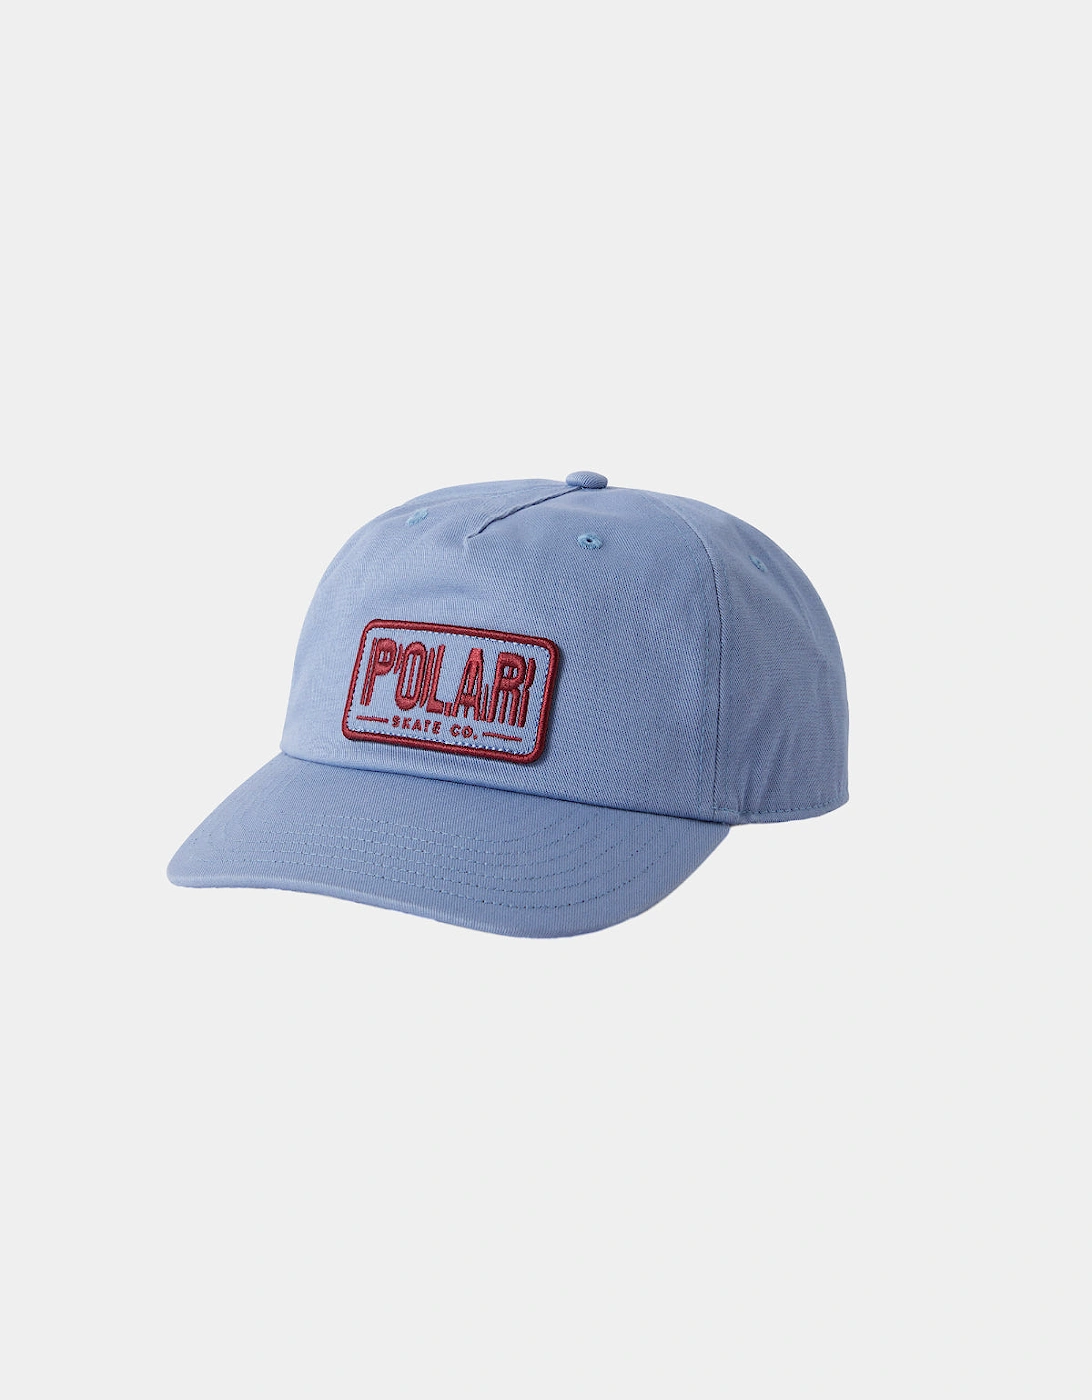 Polar Skate Co. Earthquake Patch Cap - Oxford Blue, 3 of 2